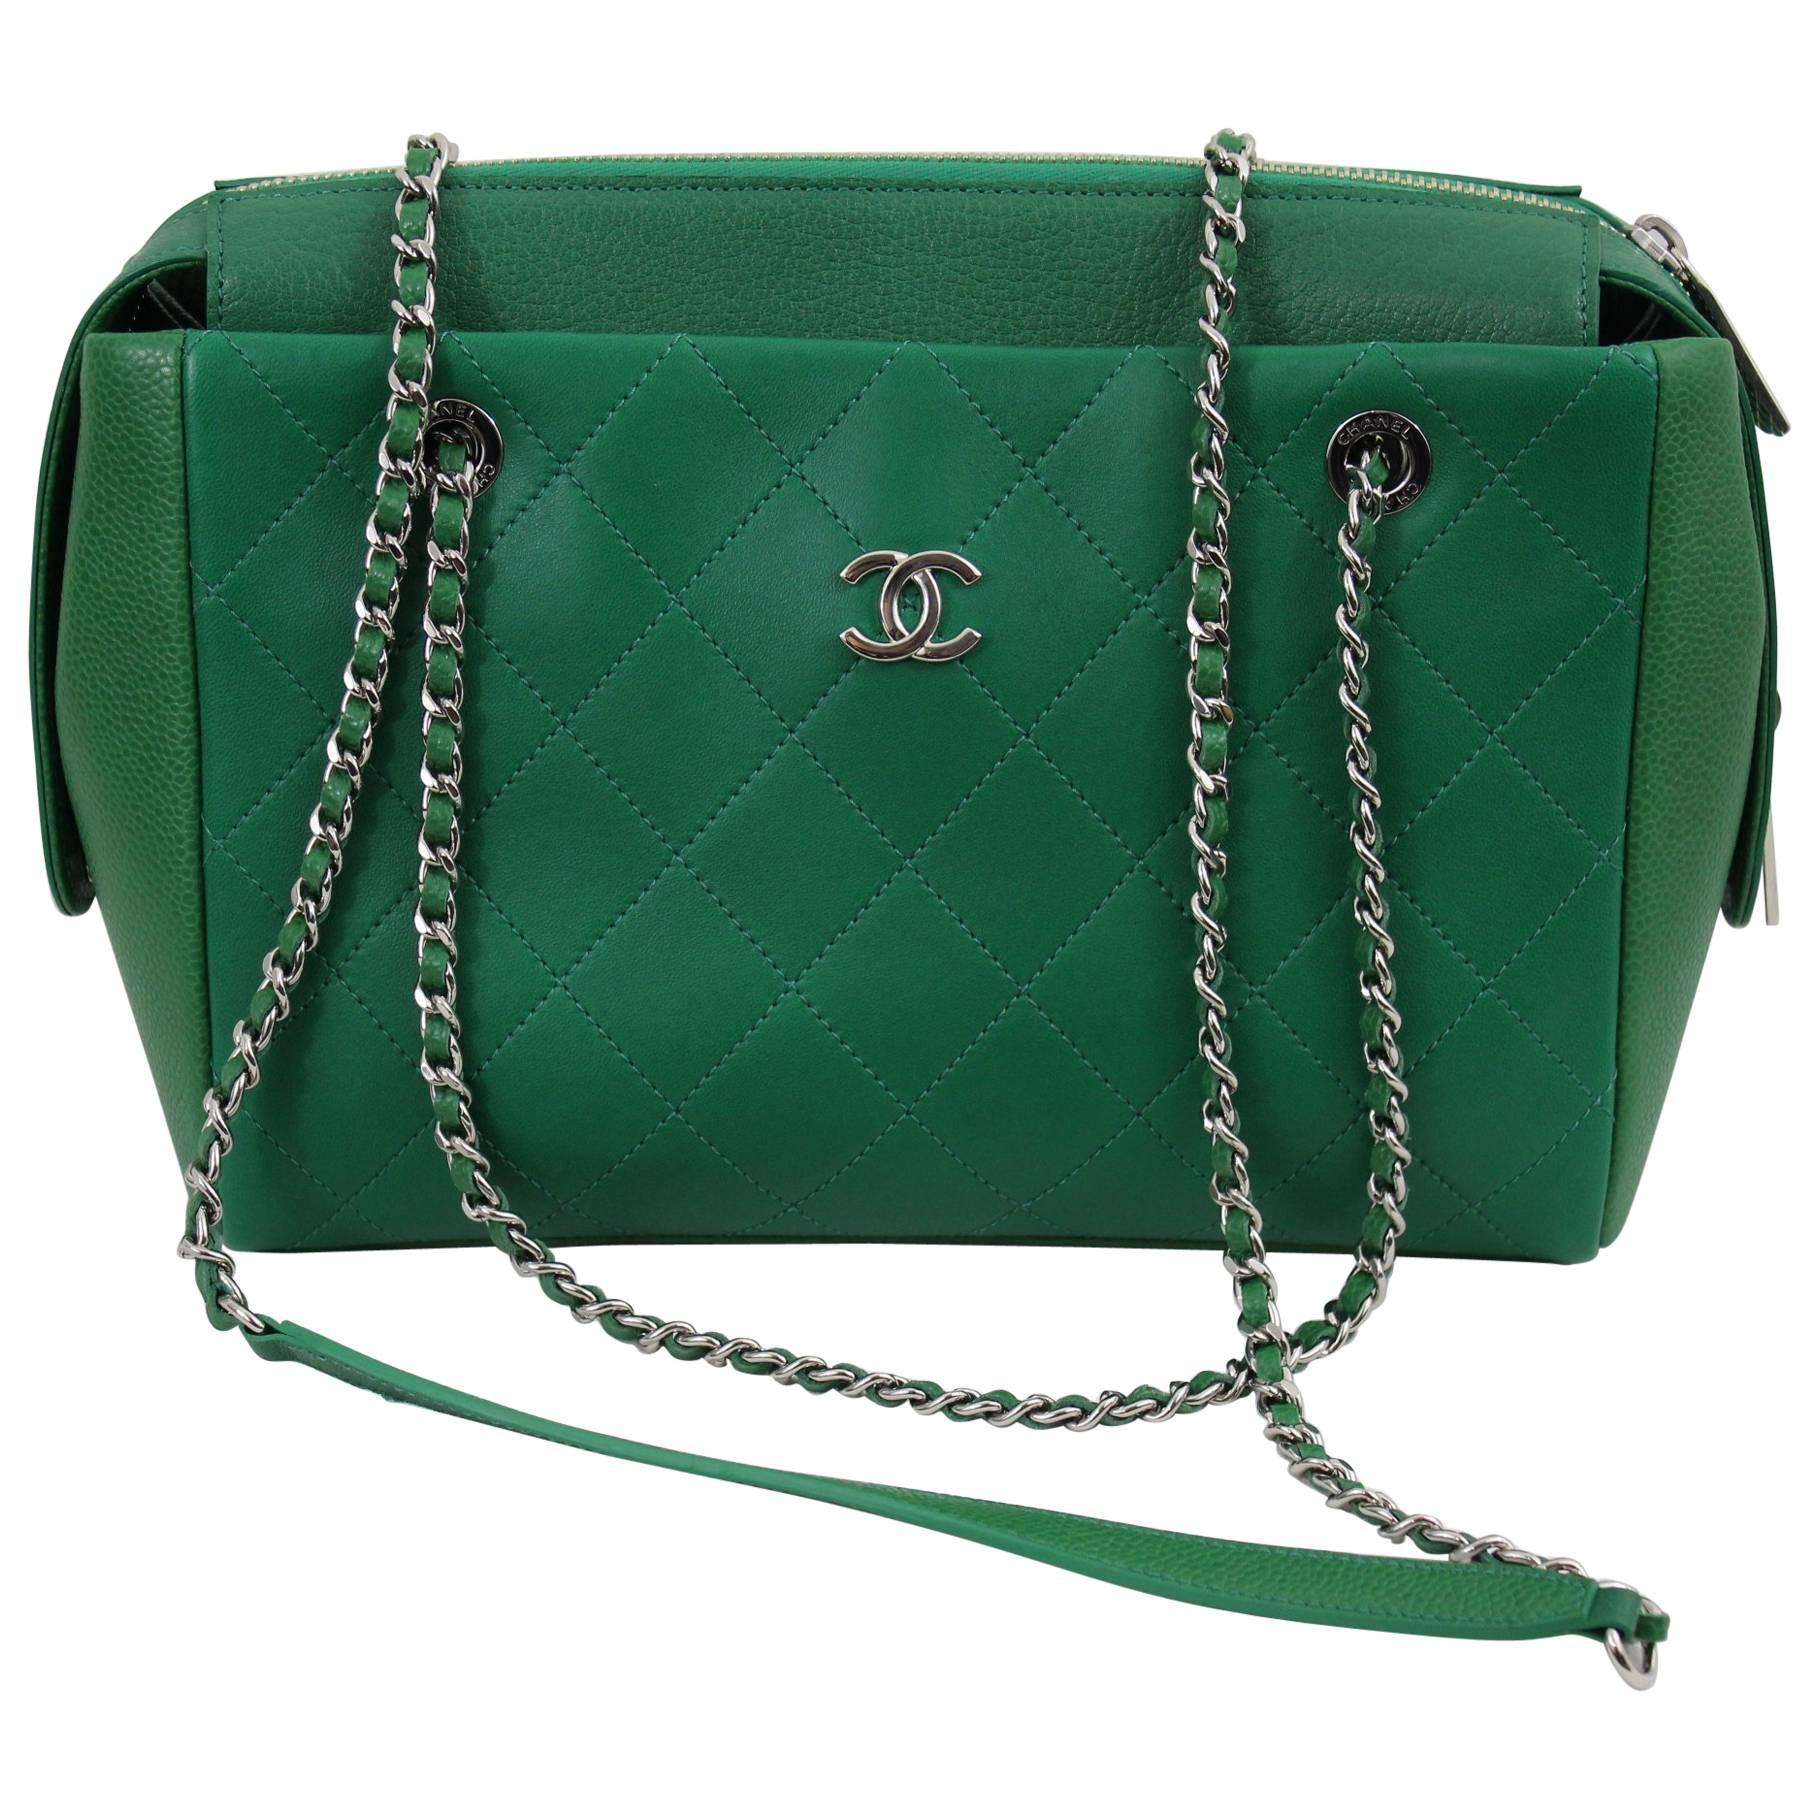 Chanel Green Leather 2017 Bag. Runaway sample